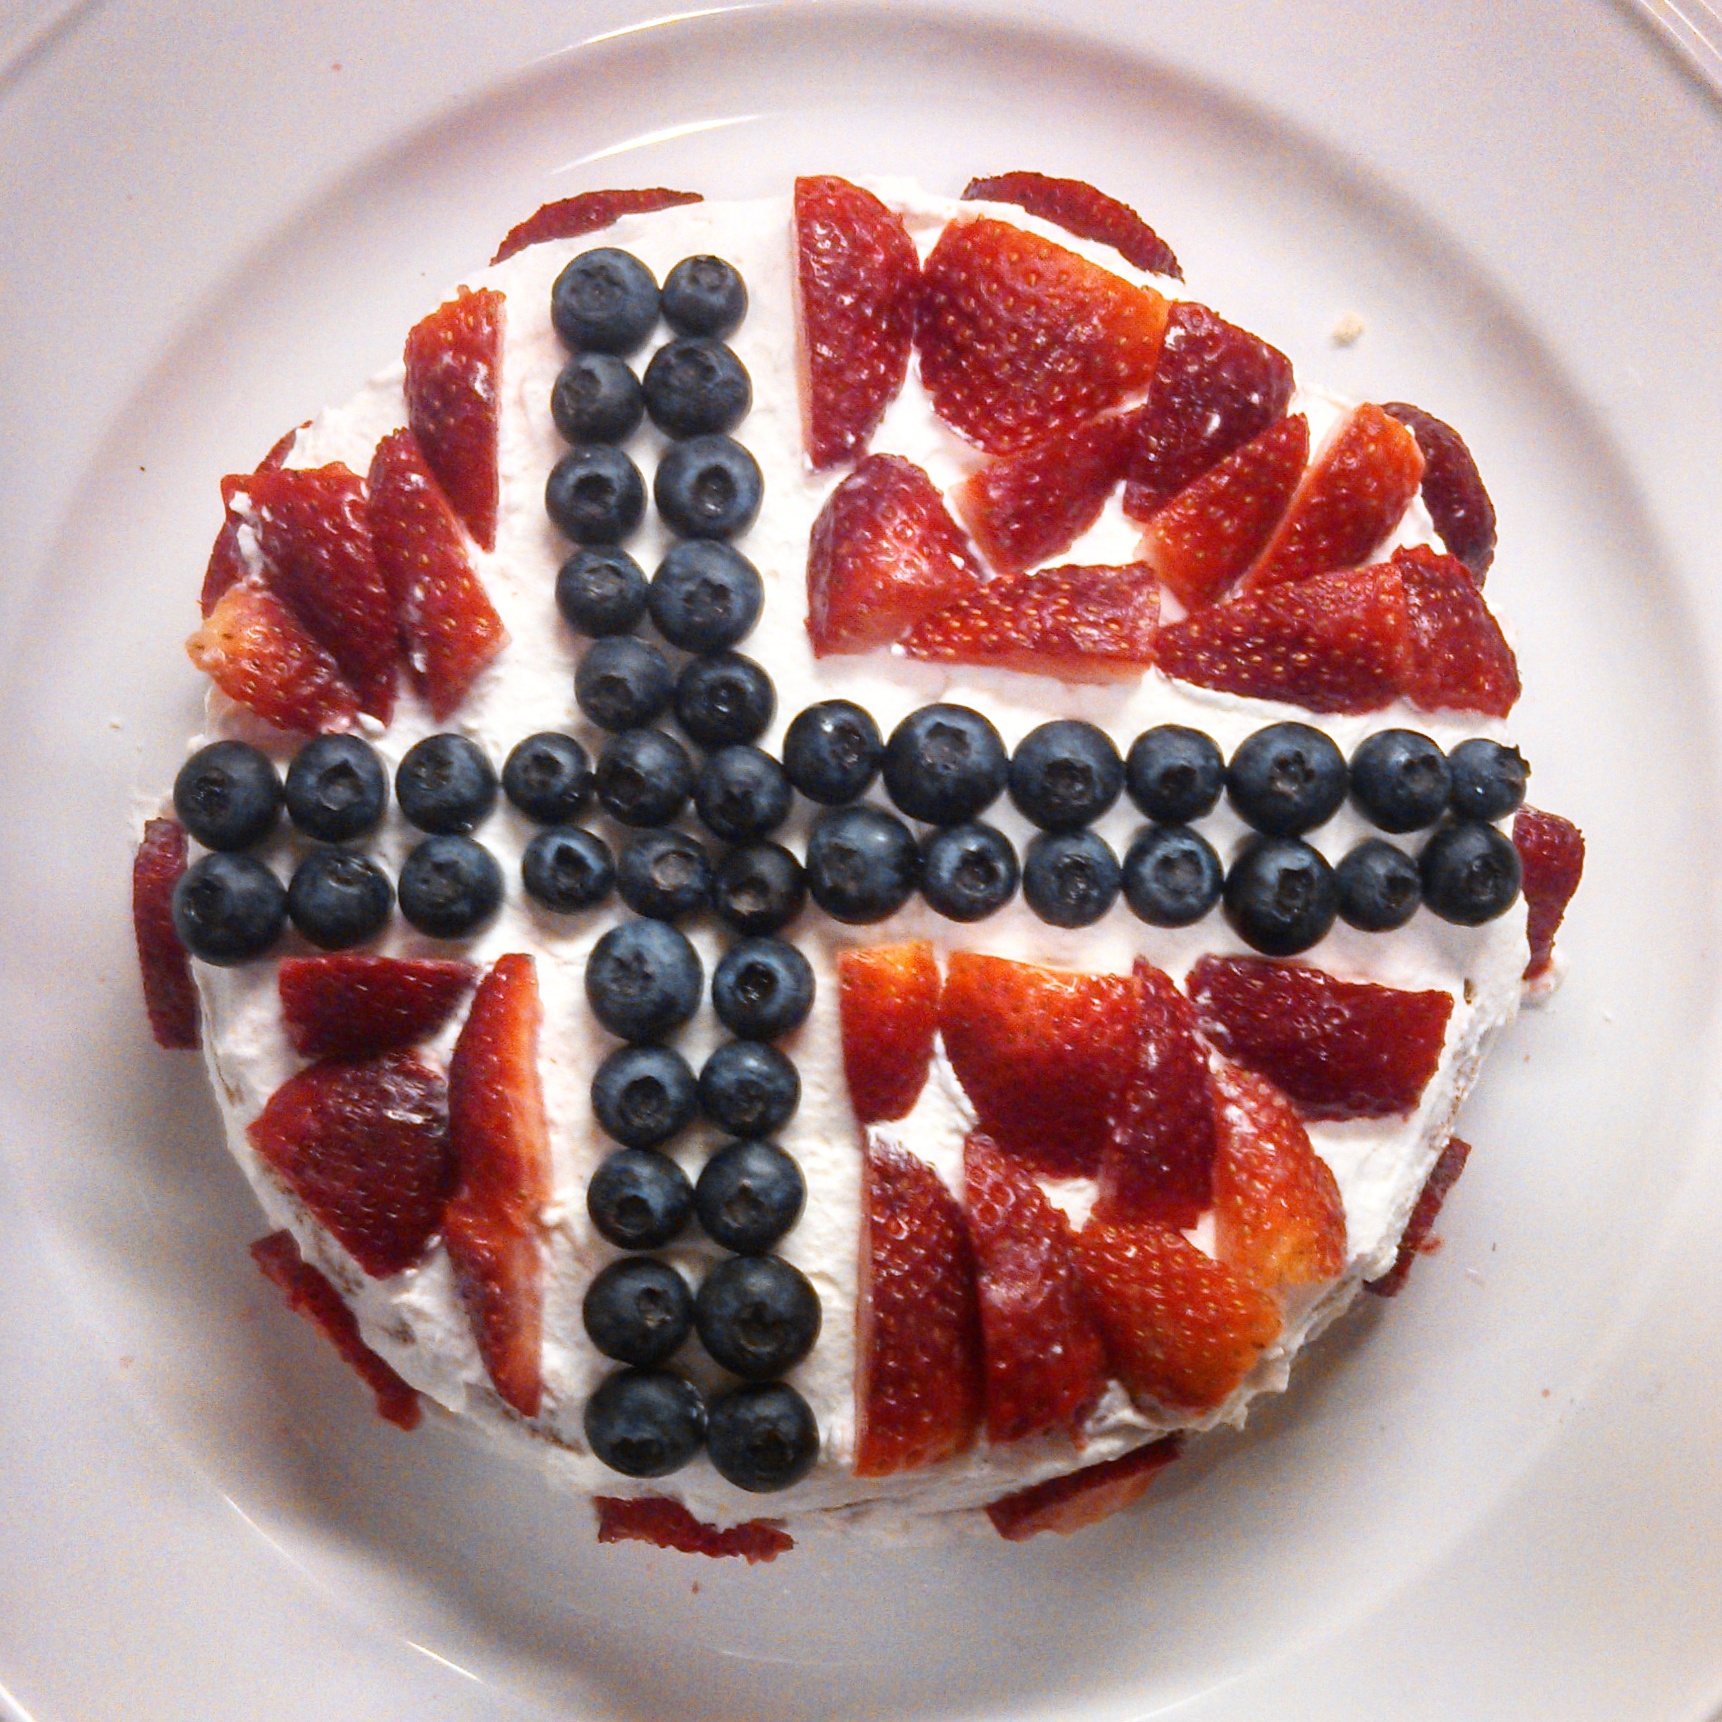 Kransekake (Norwegian Ring Cake) – The Nom Blog